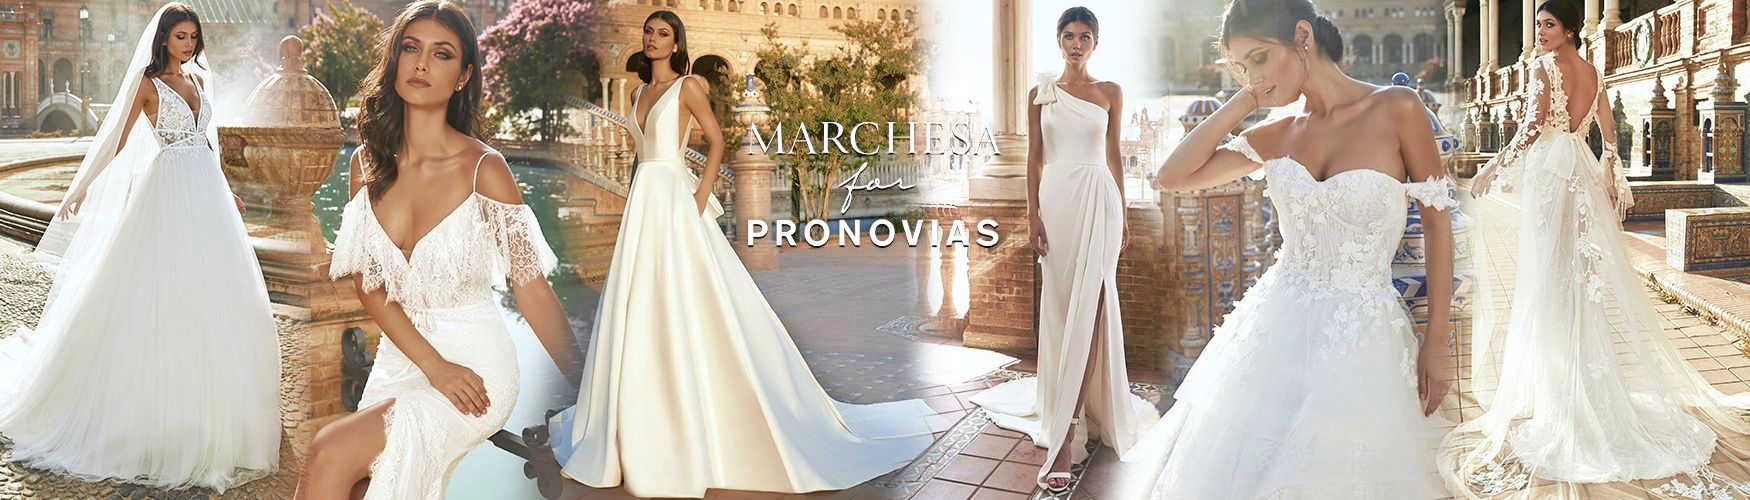 Marchesa for Pronovias